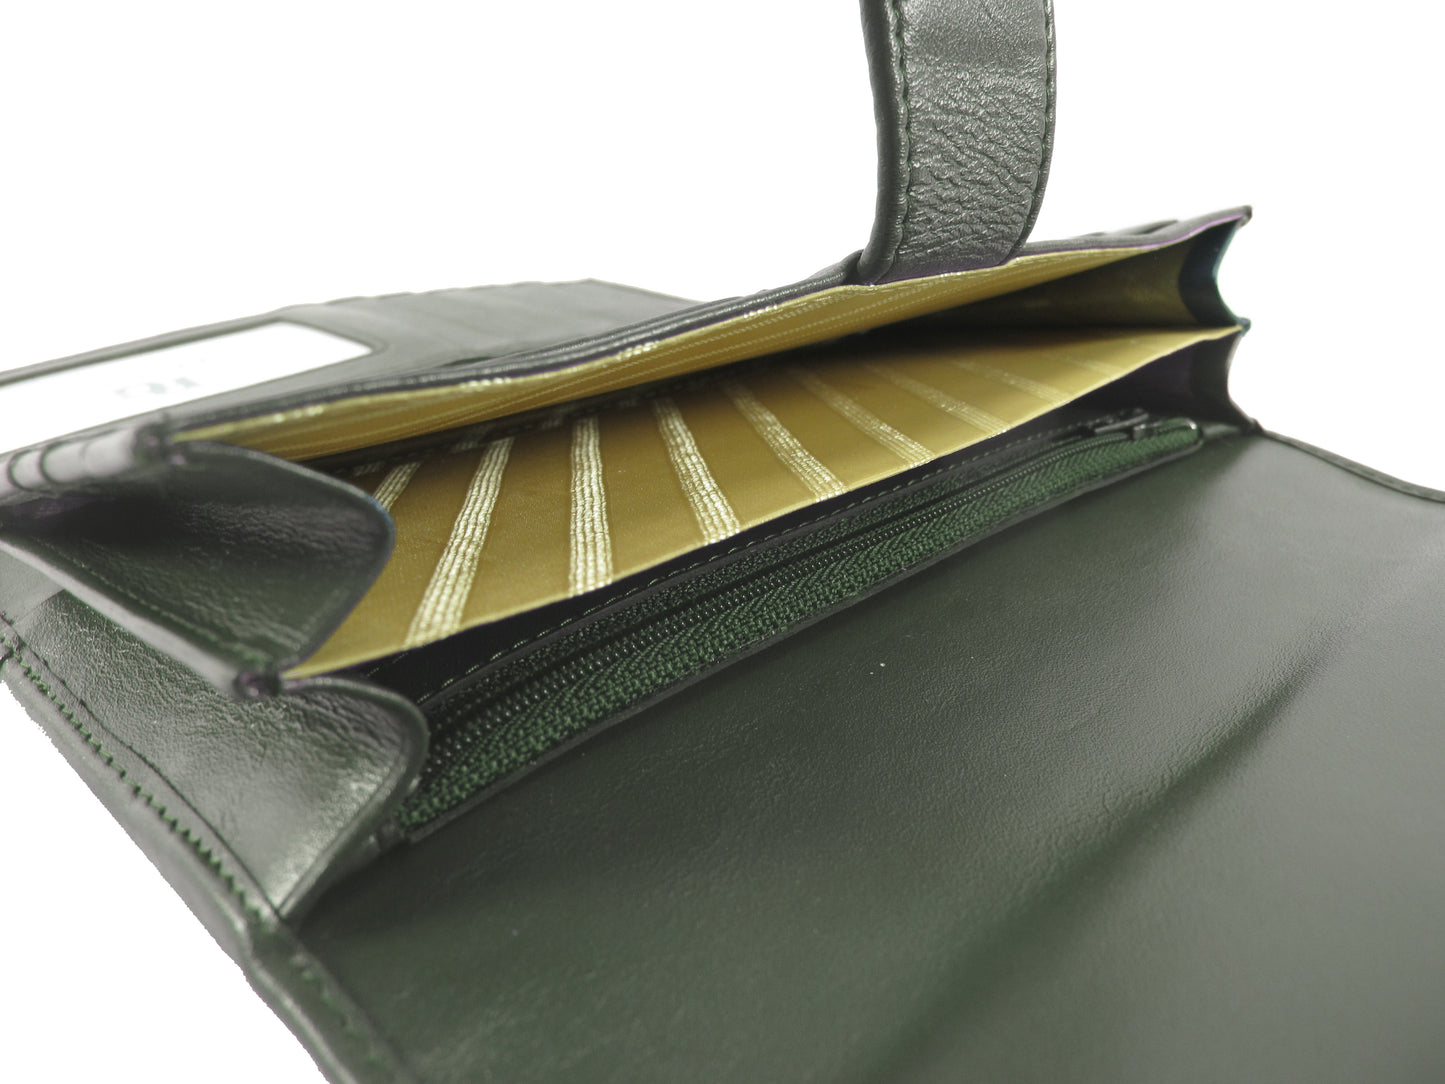 Genuine Stingray Skin Leather Women's Trifold Clutch Wallet Purse